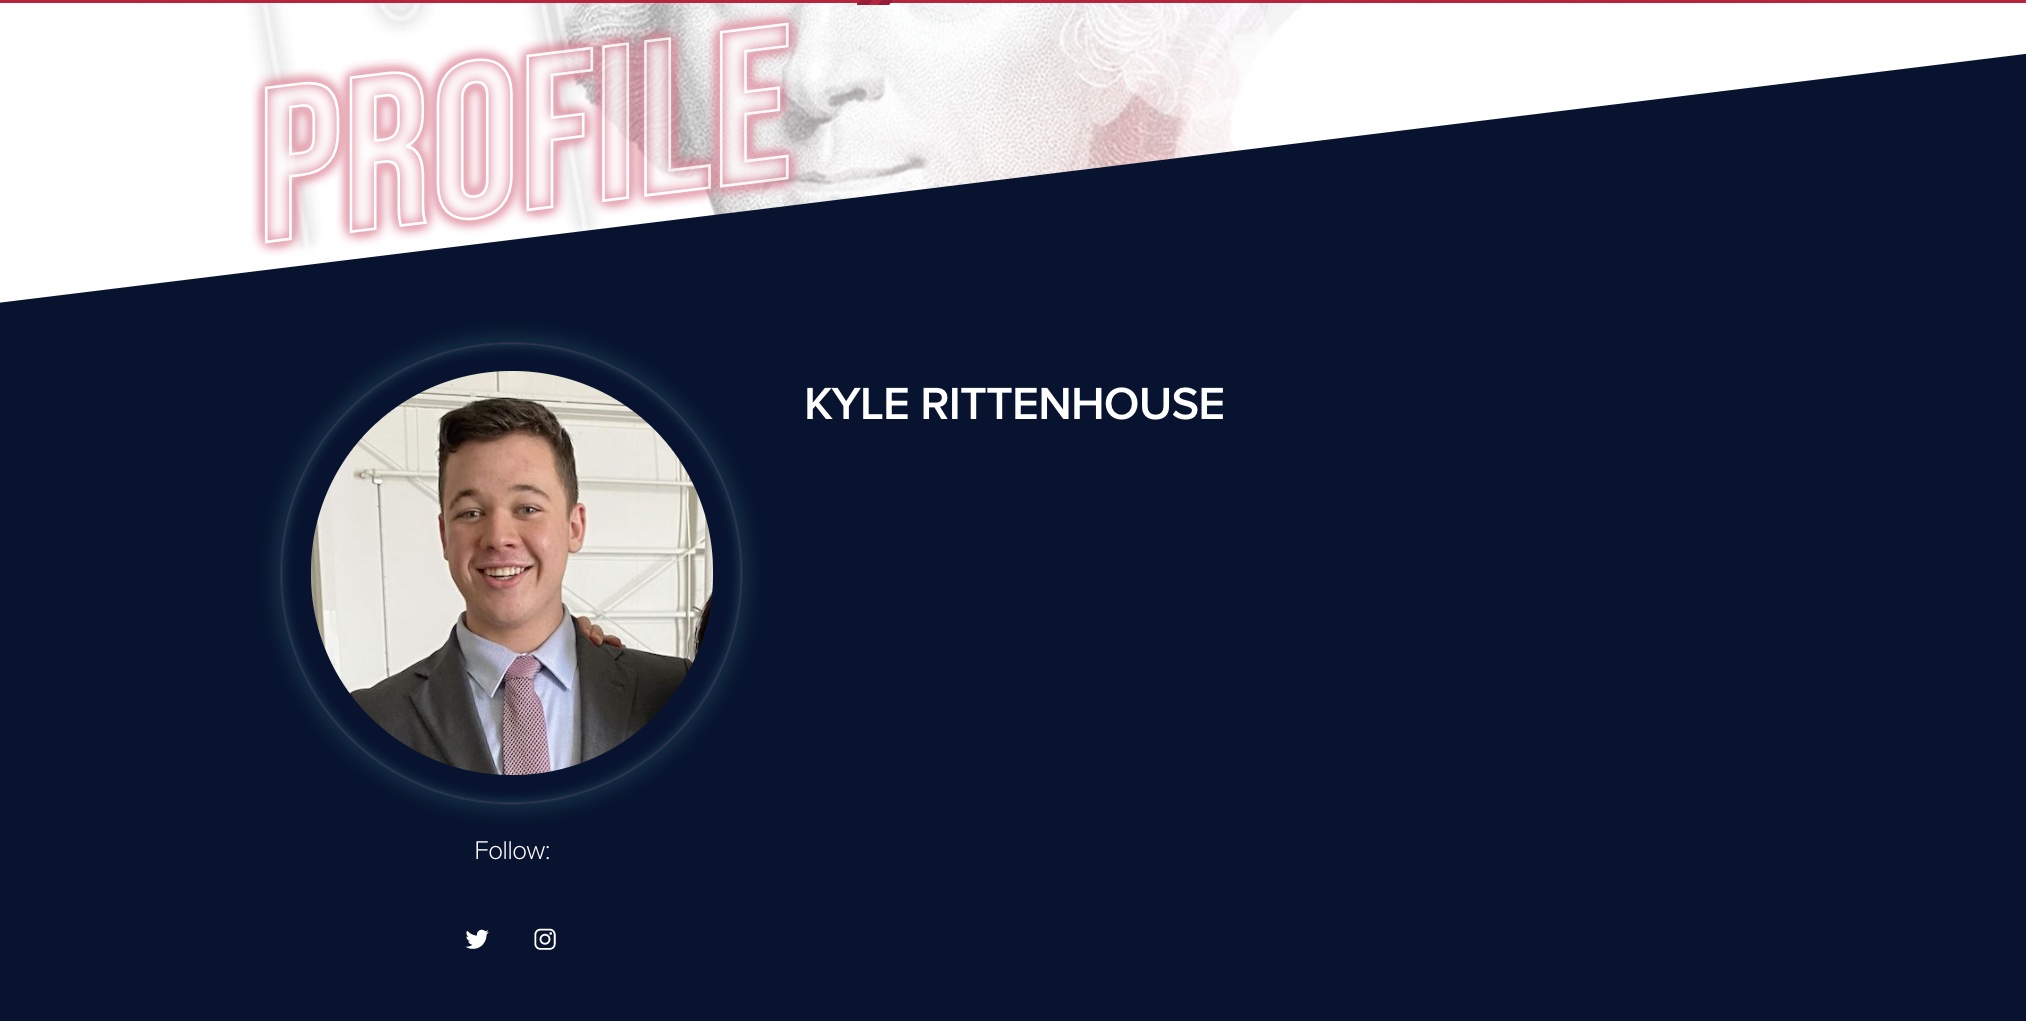 Kyle Rittenhouse AmericaFest profile